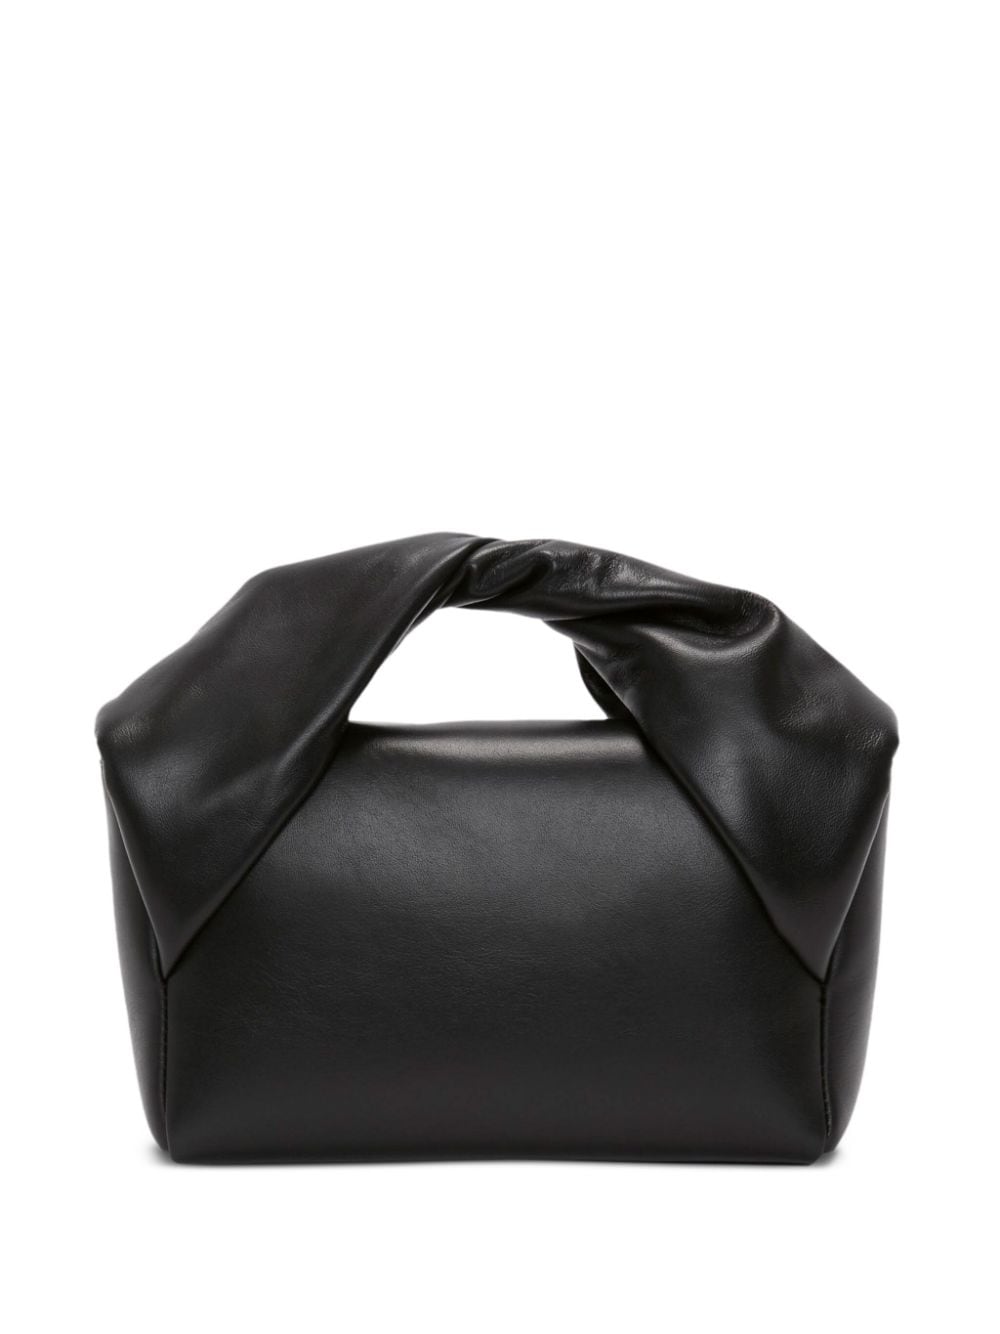 JW ANDERSON Twisted Black Pouch Handbag for Women